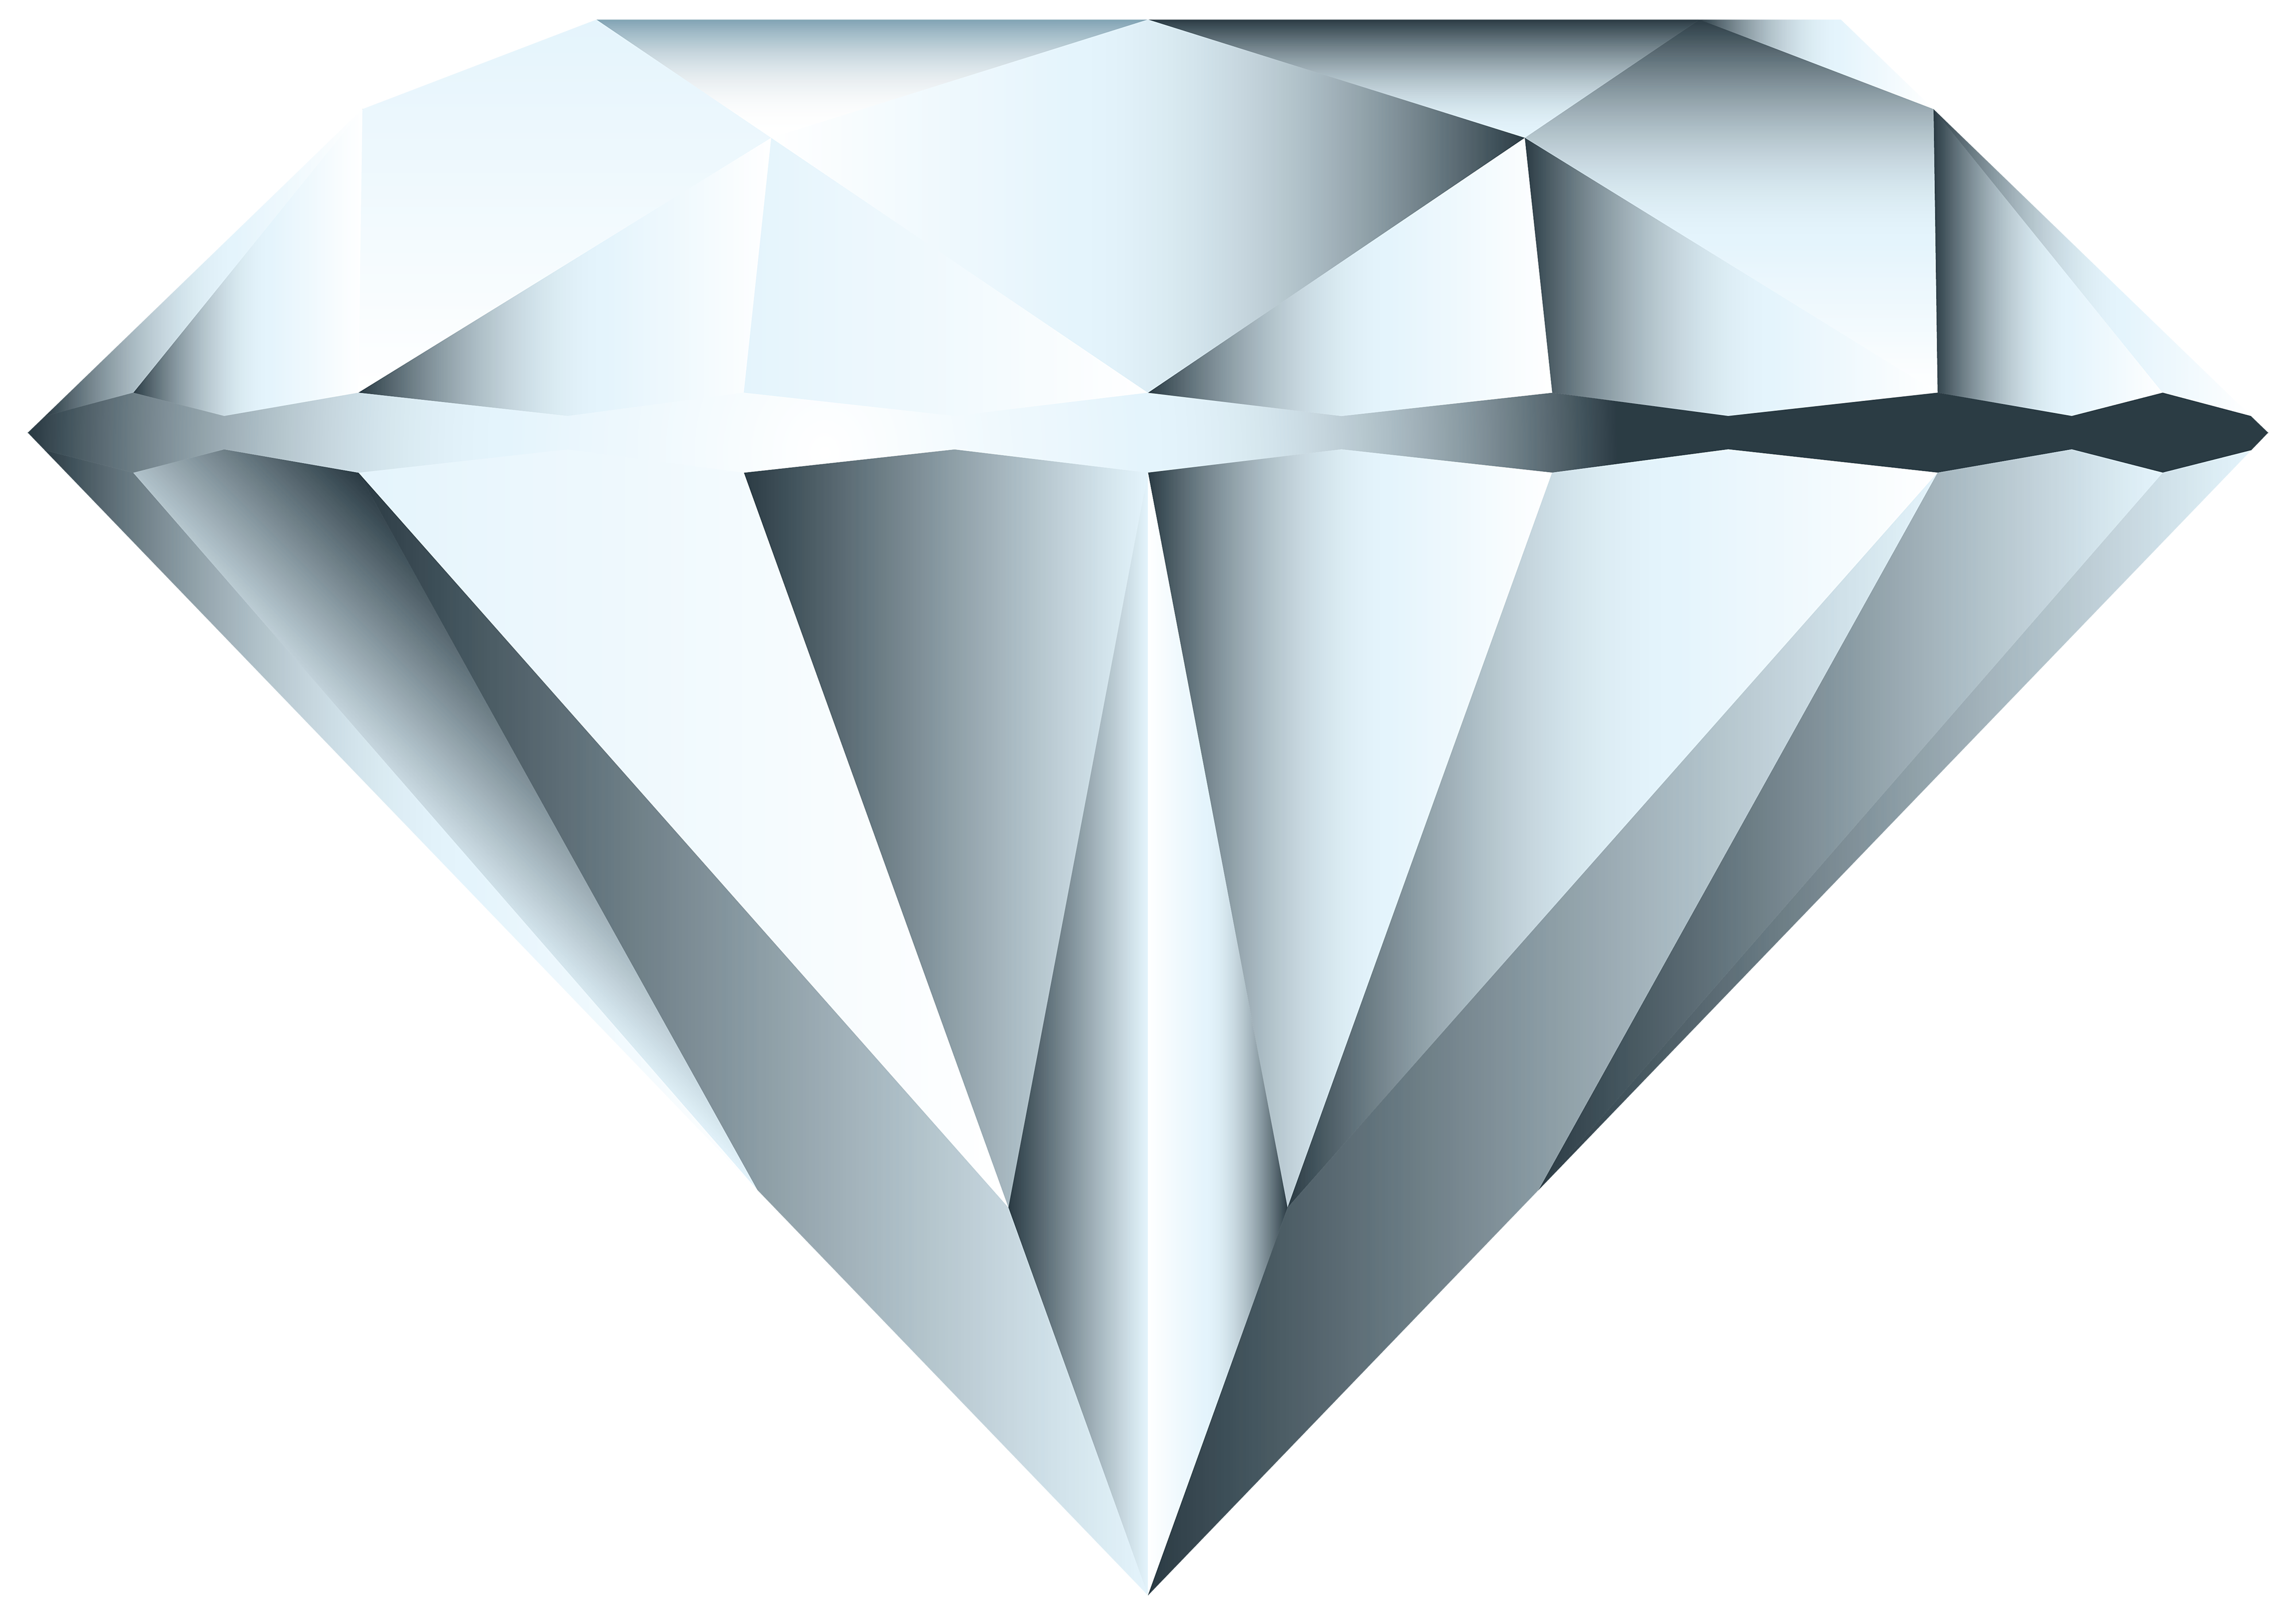 Sparkle clipart diamond shaped object. Png image best web